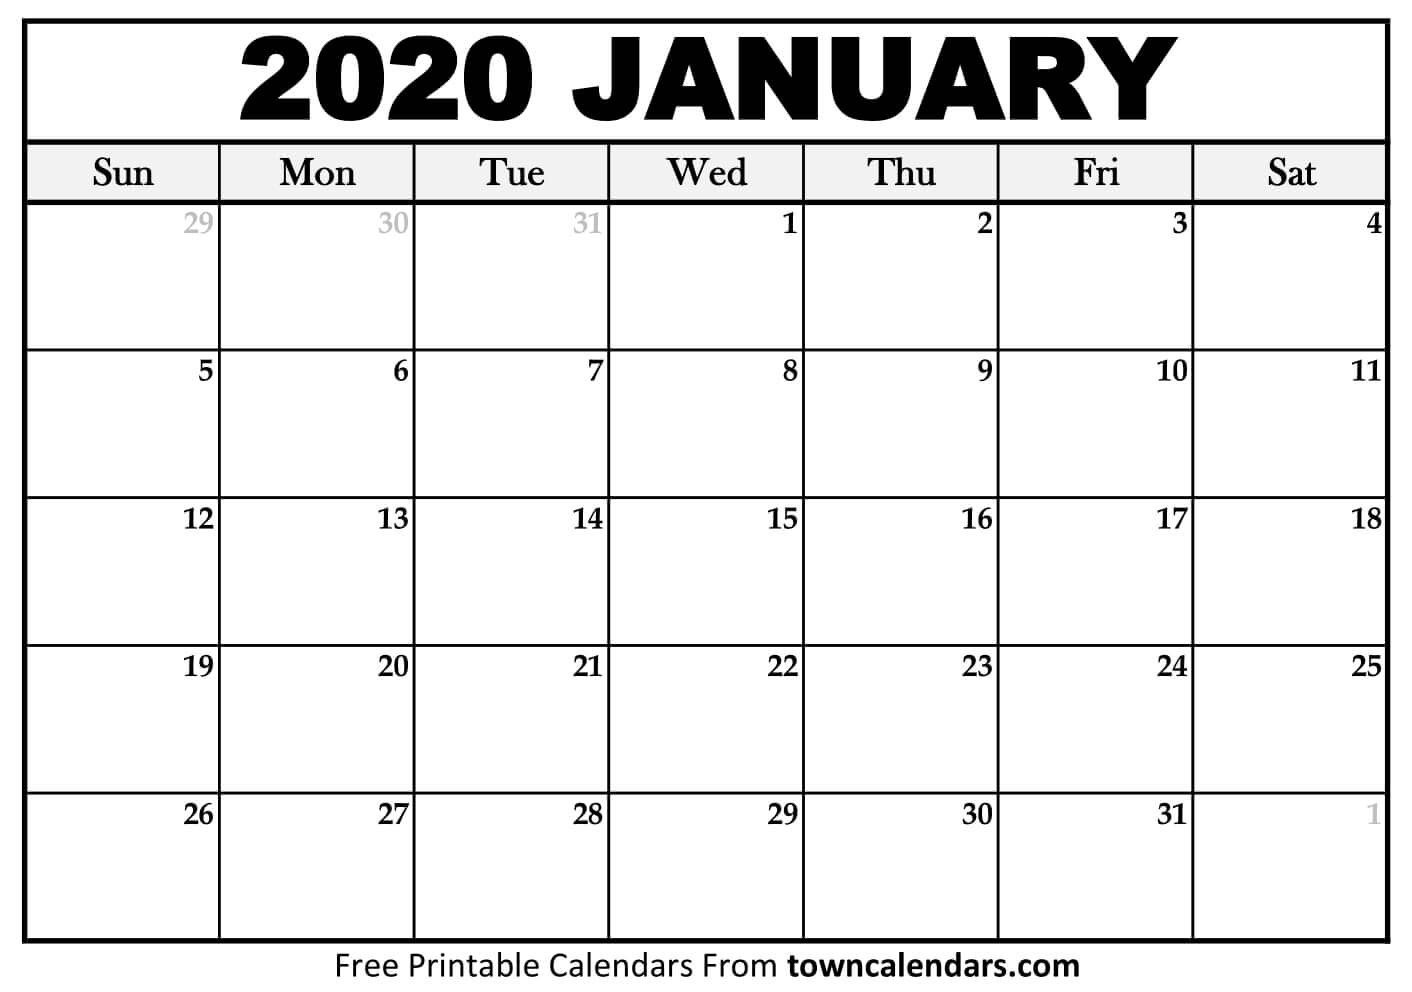 Printable January 2020 Calendar - Towncalendars